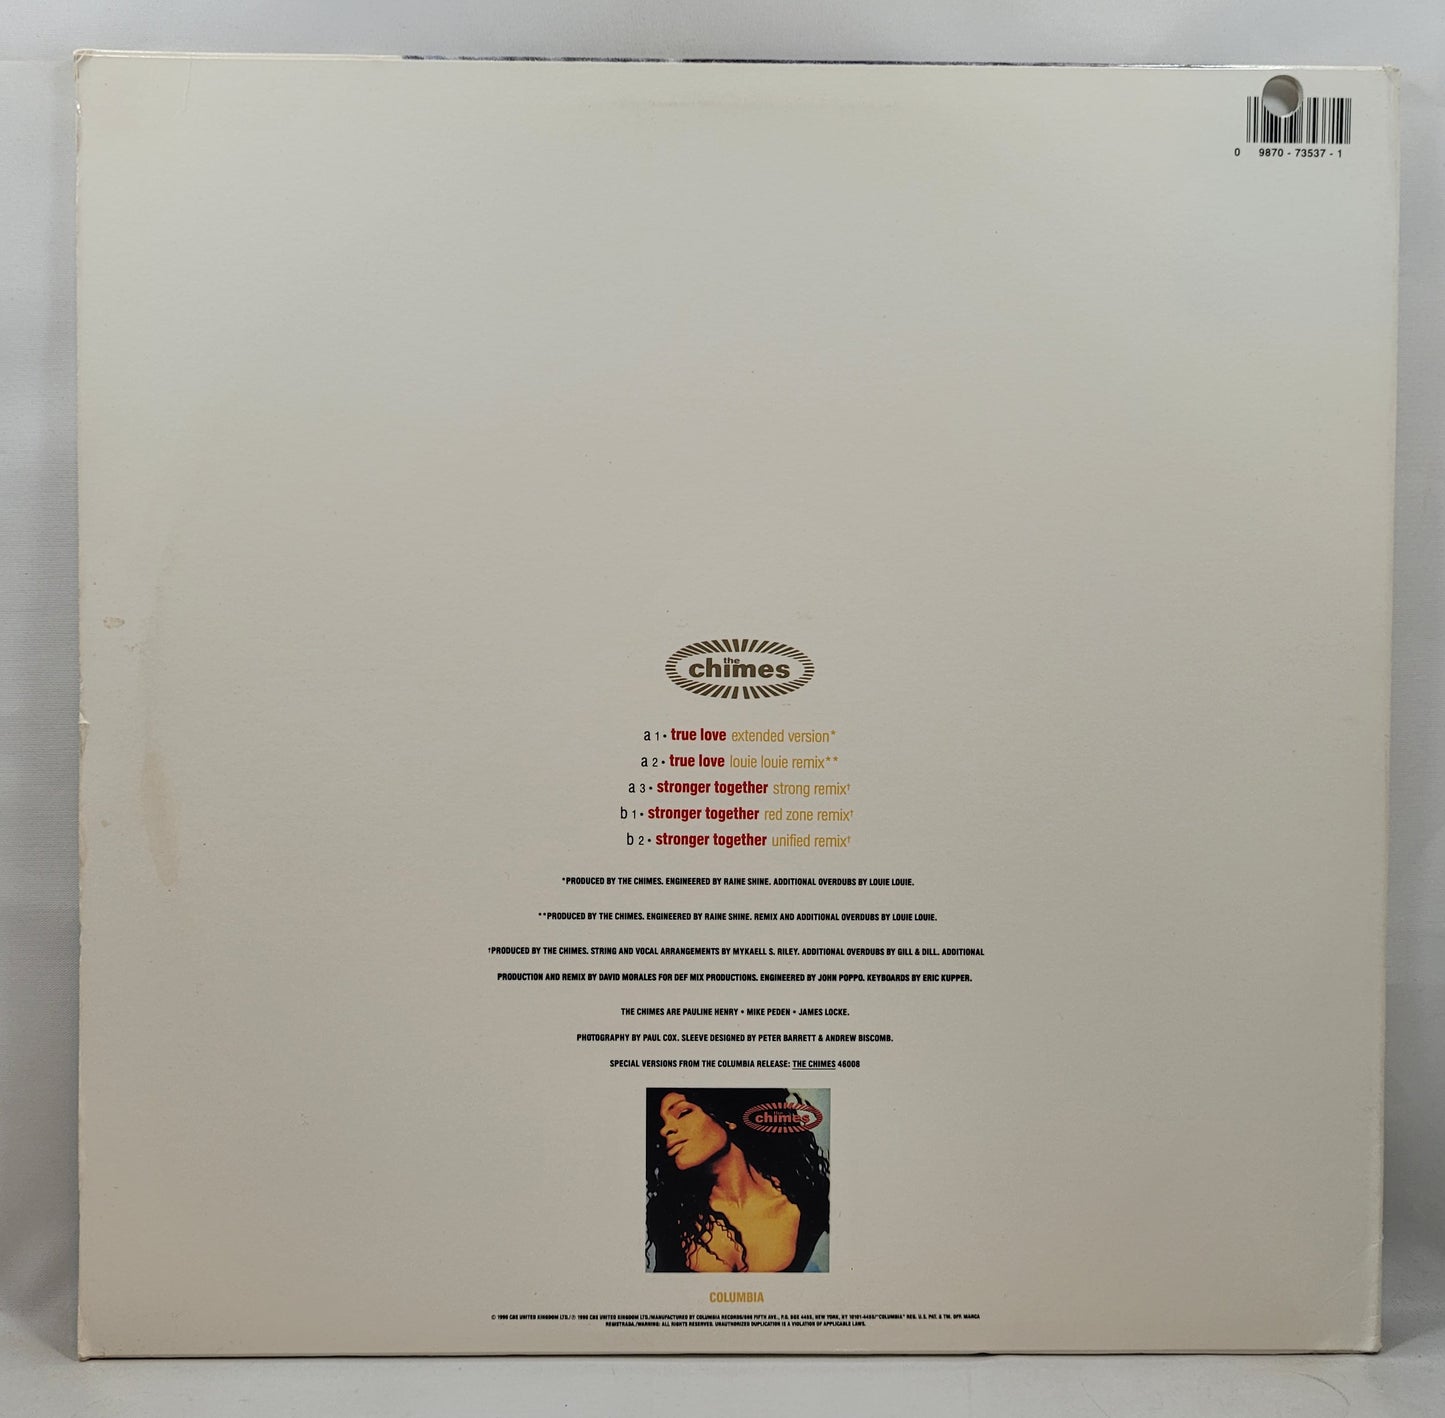 The Chimes - True Love [Vinyl Record 12" Single]